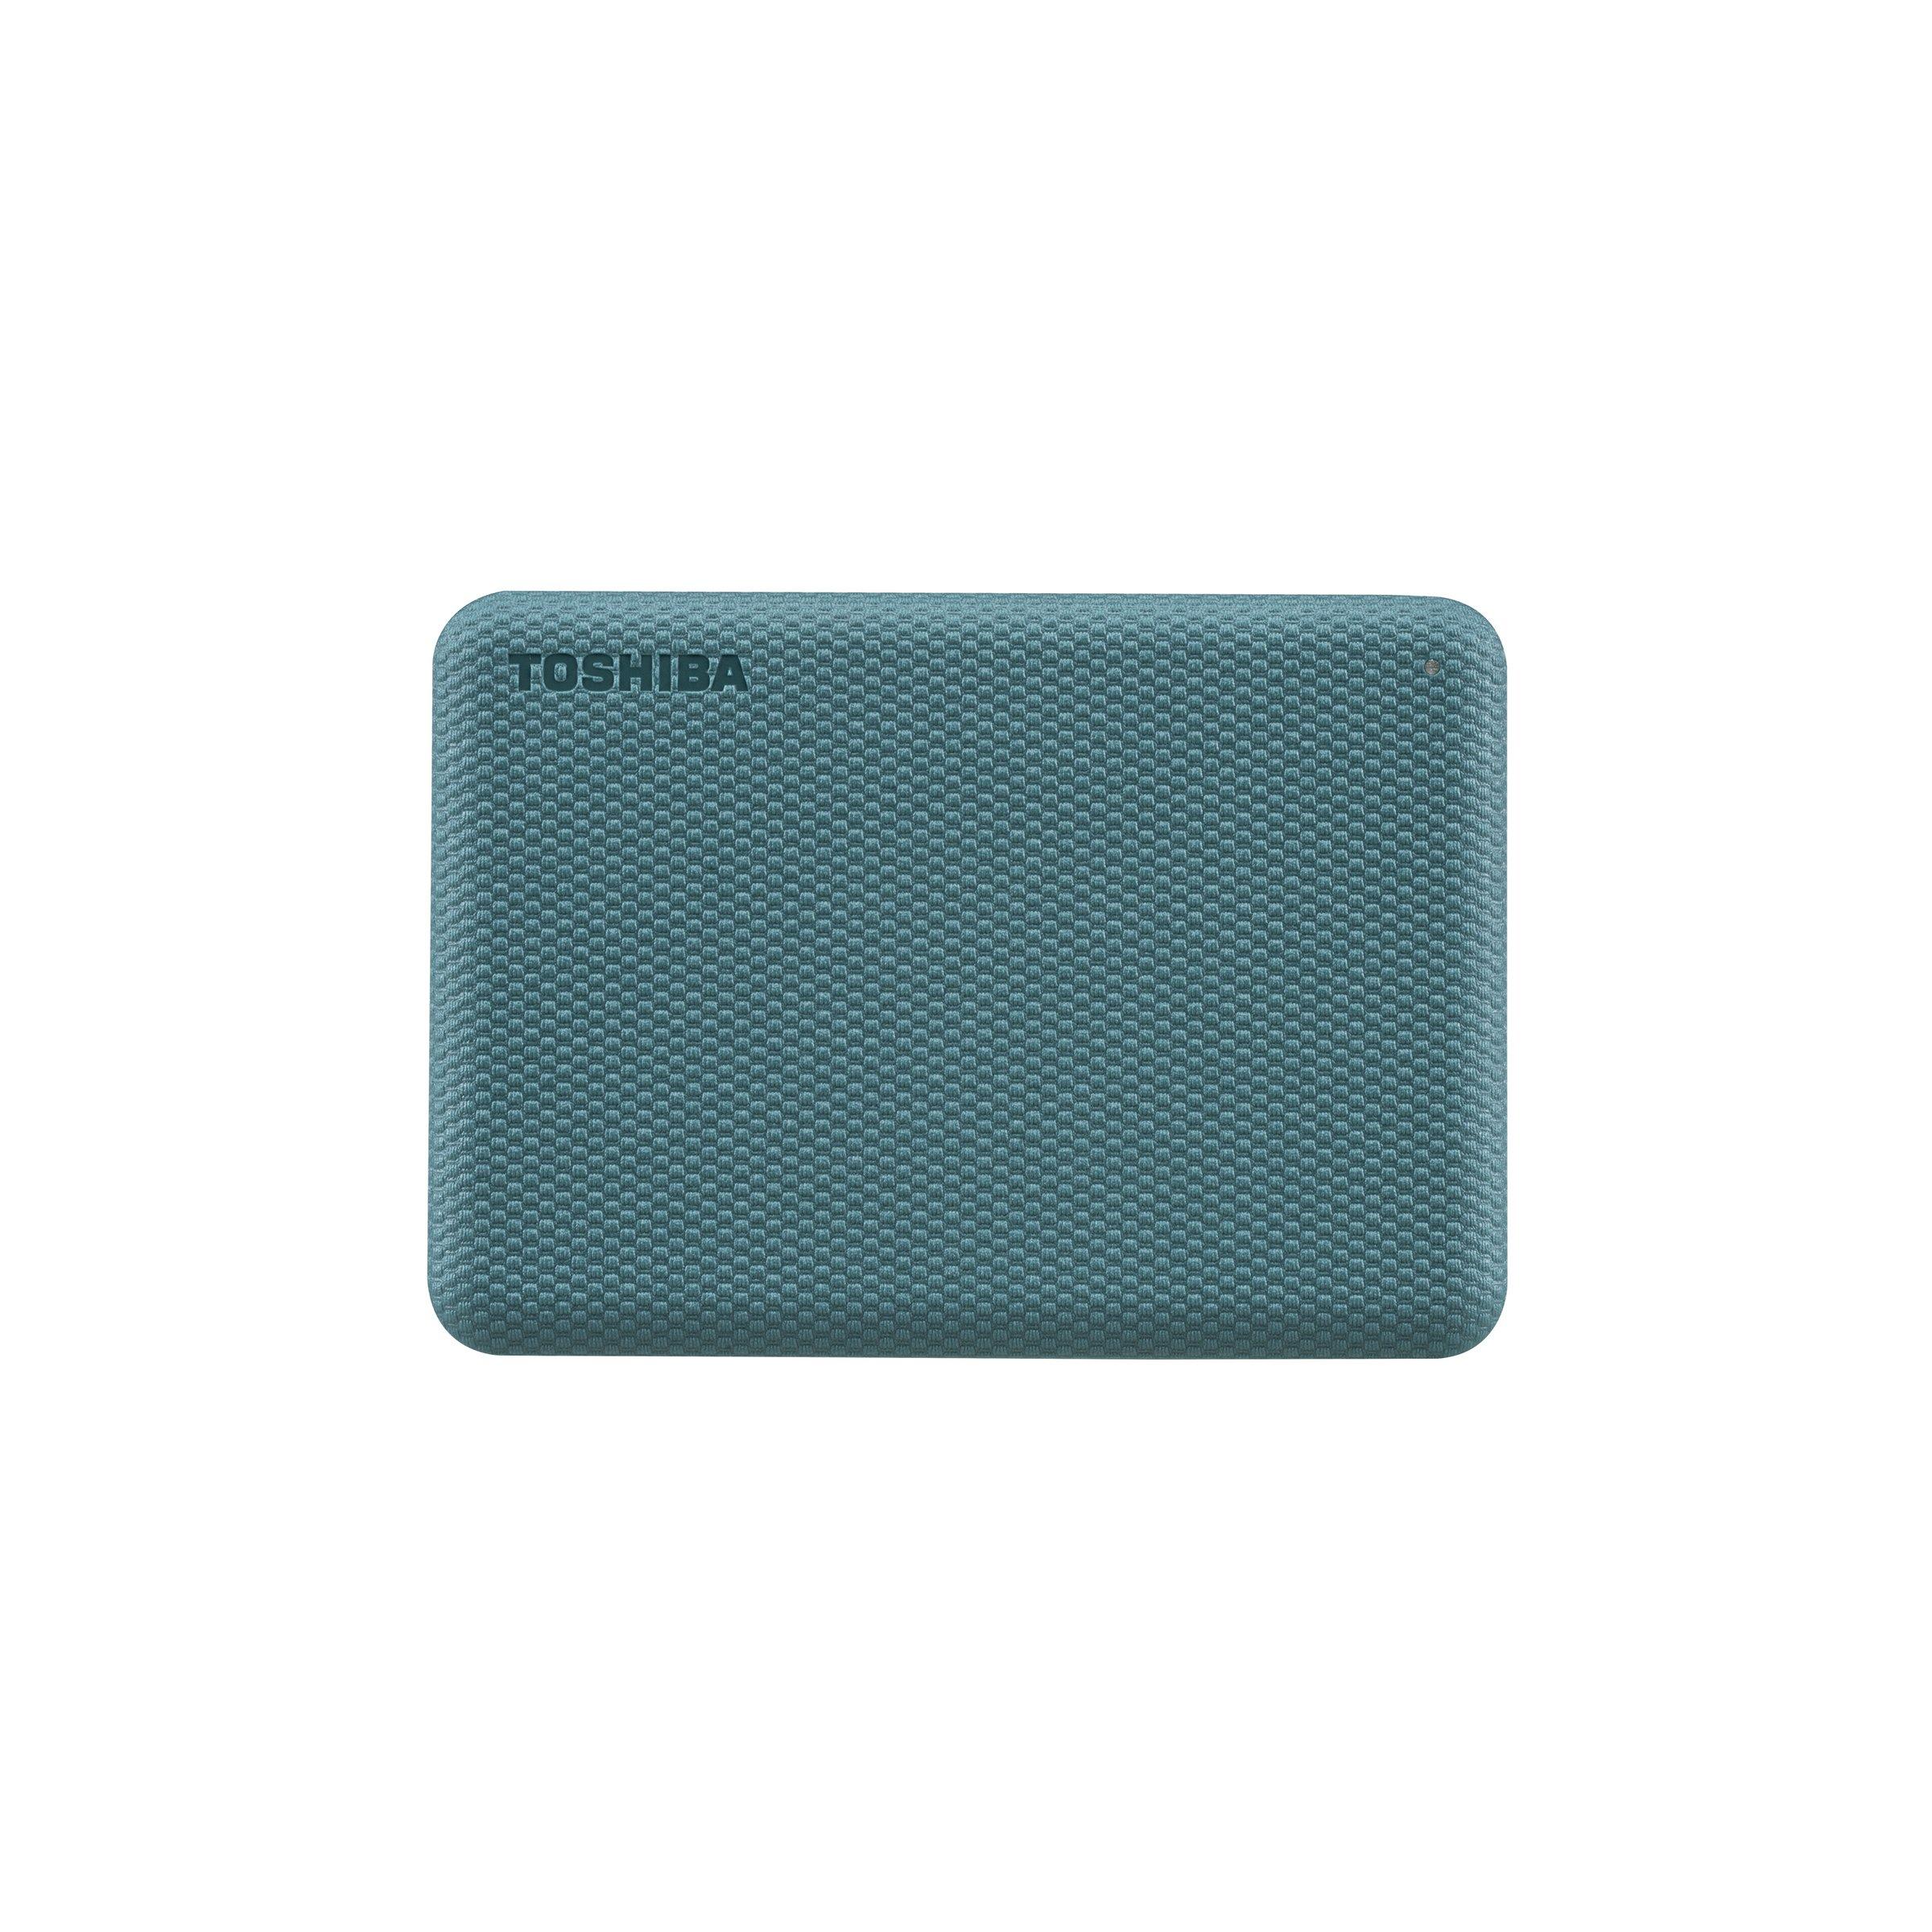 Toshiba CANVIO Advance Portable External Hard Drive 2TB